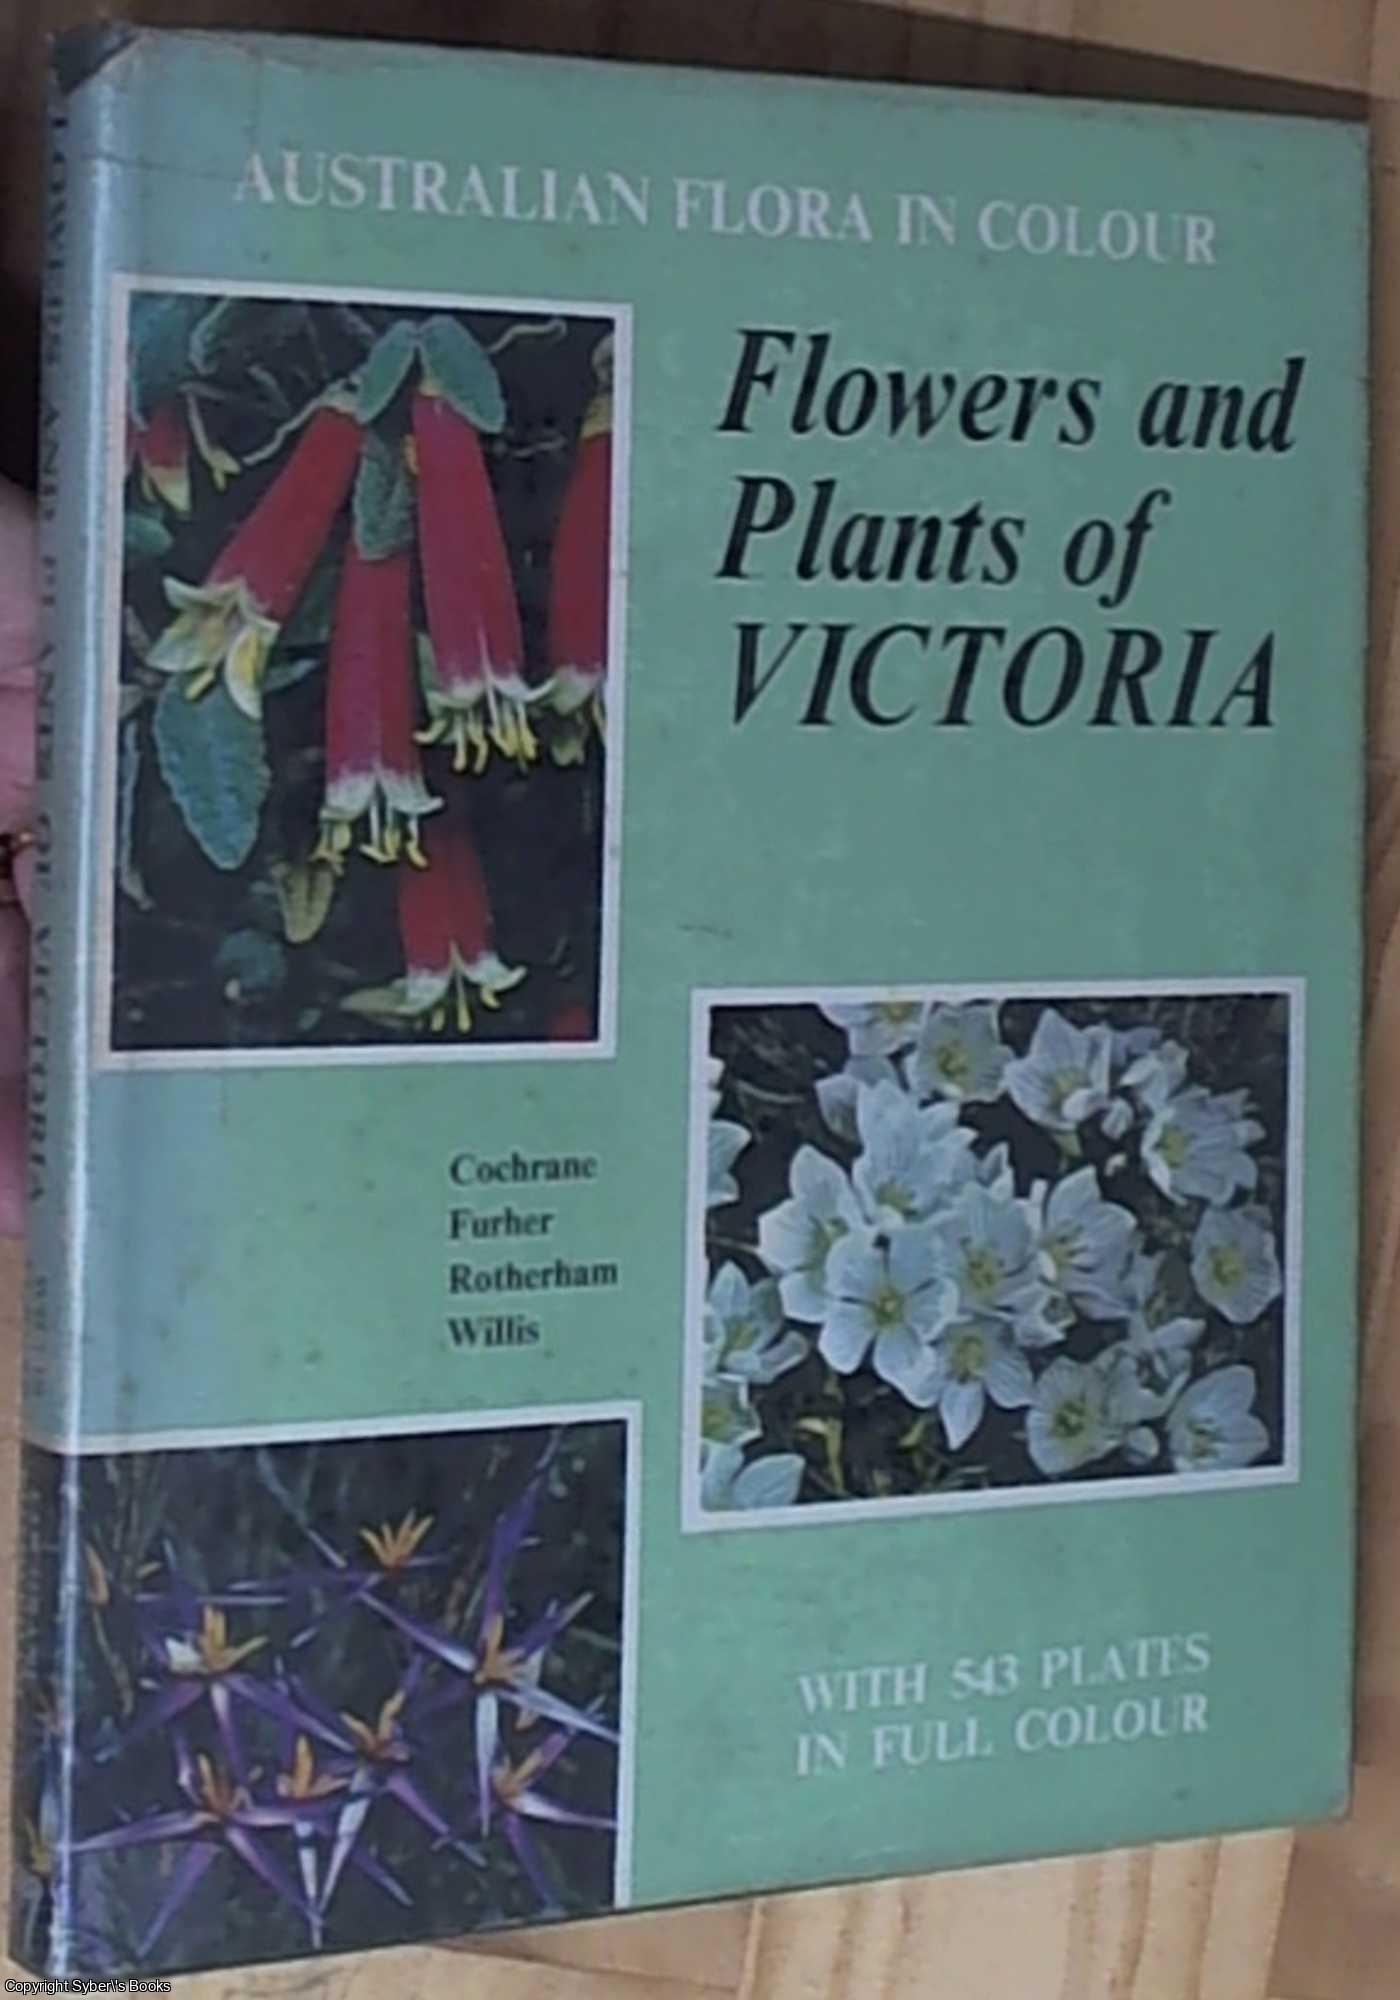 Cochrane, G. R & Fuhrer, B. A & Rotherham, E. R. +& Willis, J. H - Australian Flora in Colour: Flowers and Plants of Victoria